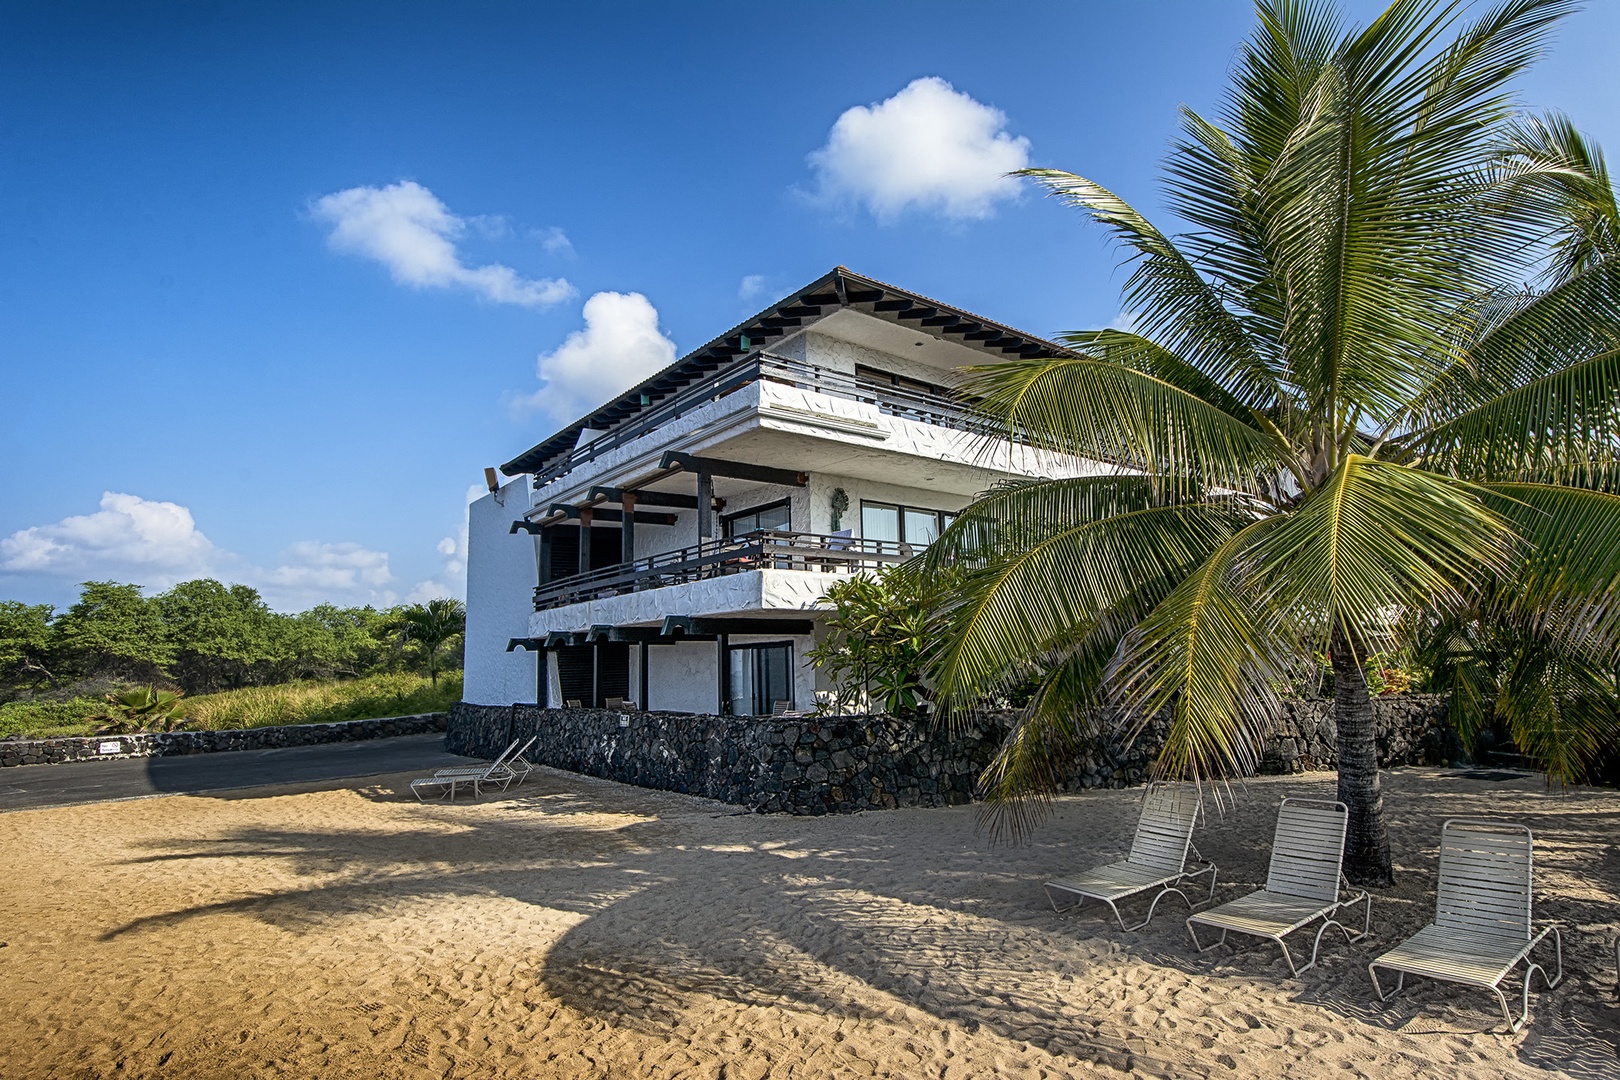 Kailua Kona Vacation Rentals, Casa De Emdeko 222 - Man made beach area on the ocean side of the complex